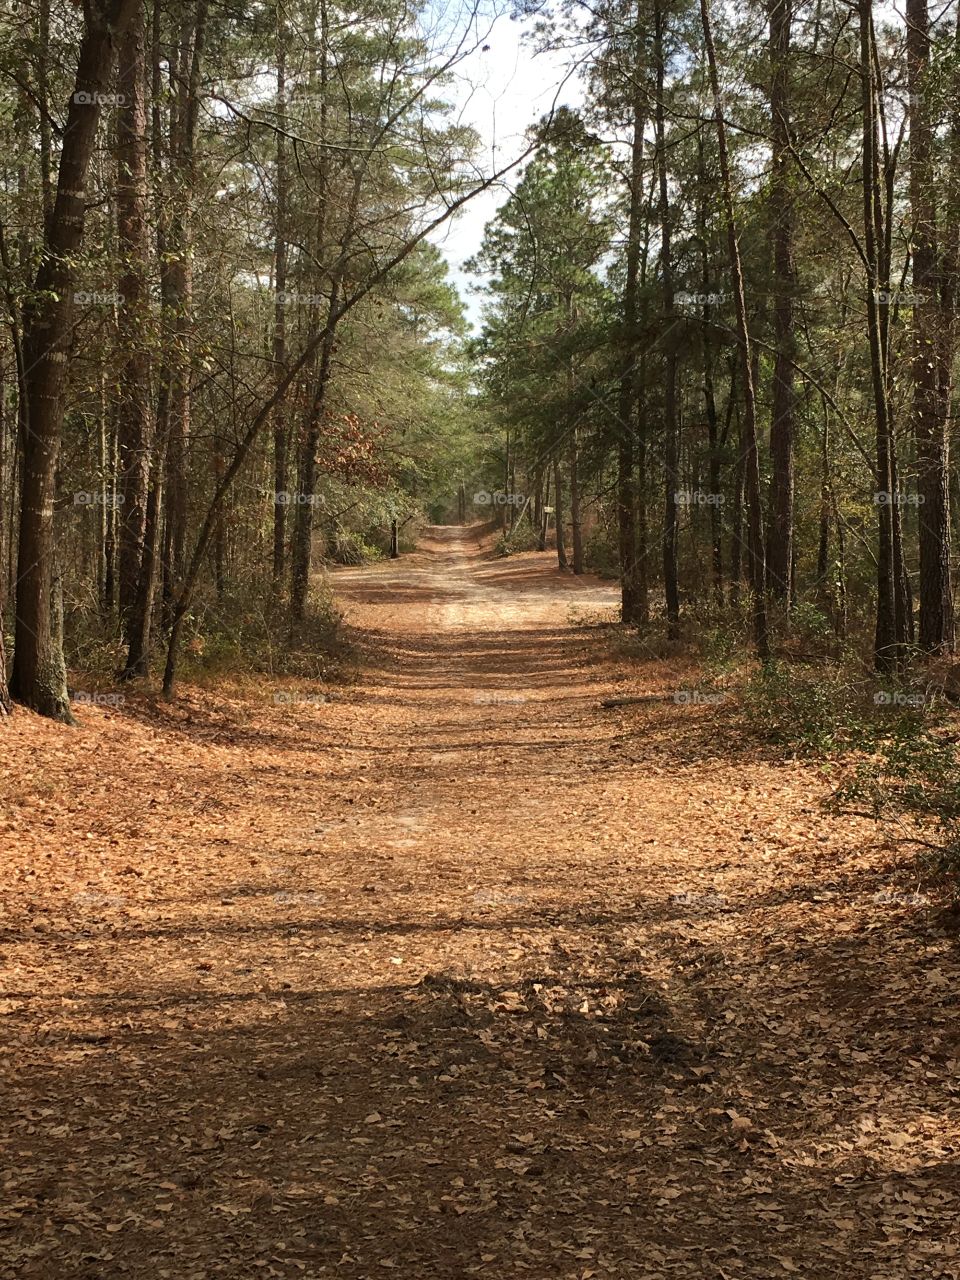 Crossroads in the woods